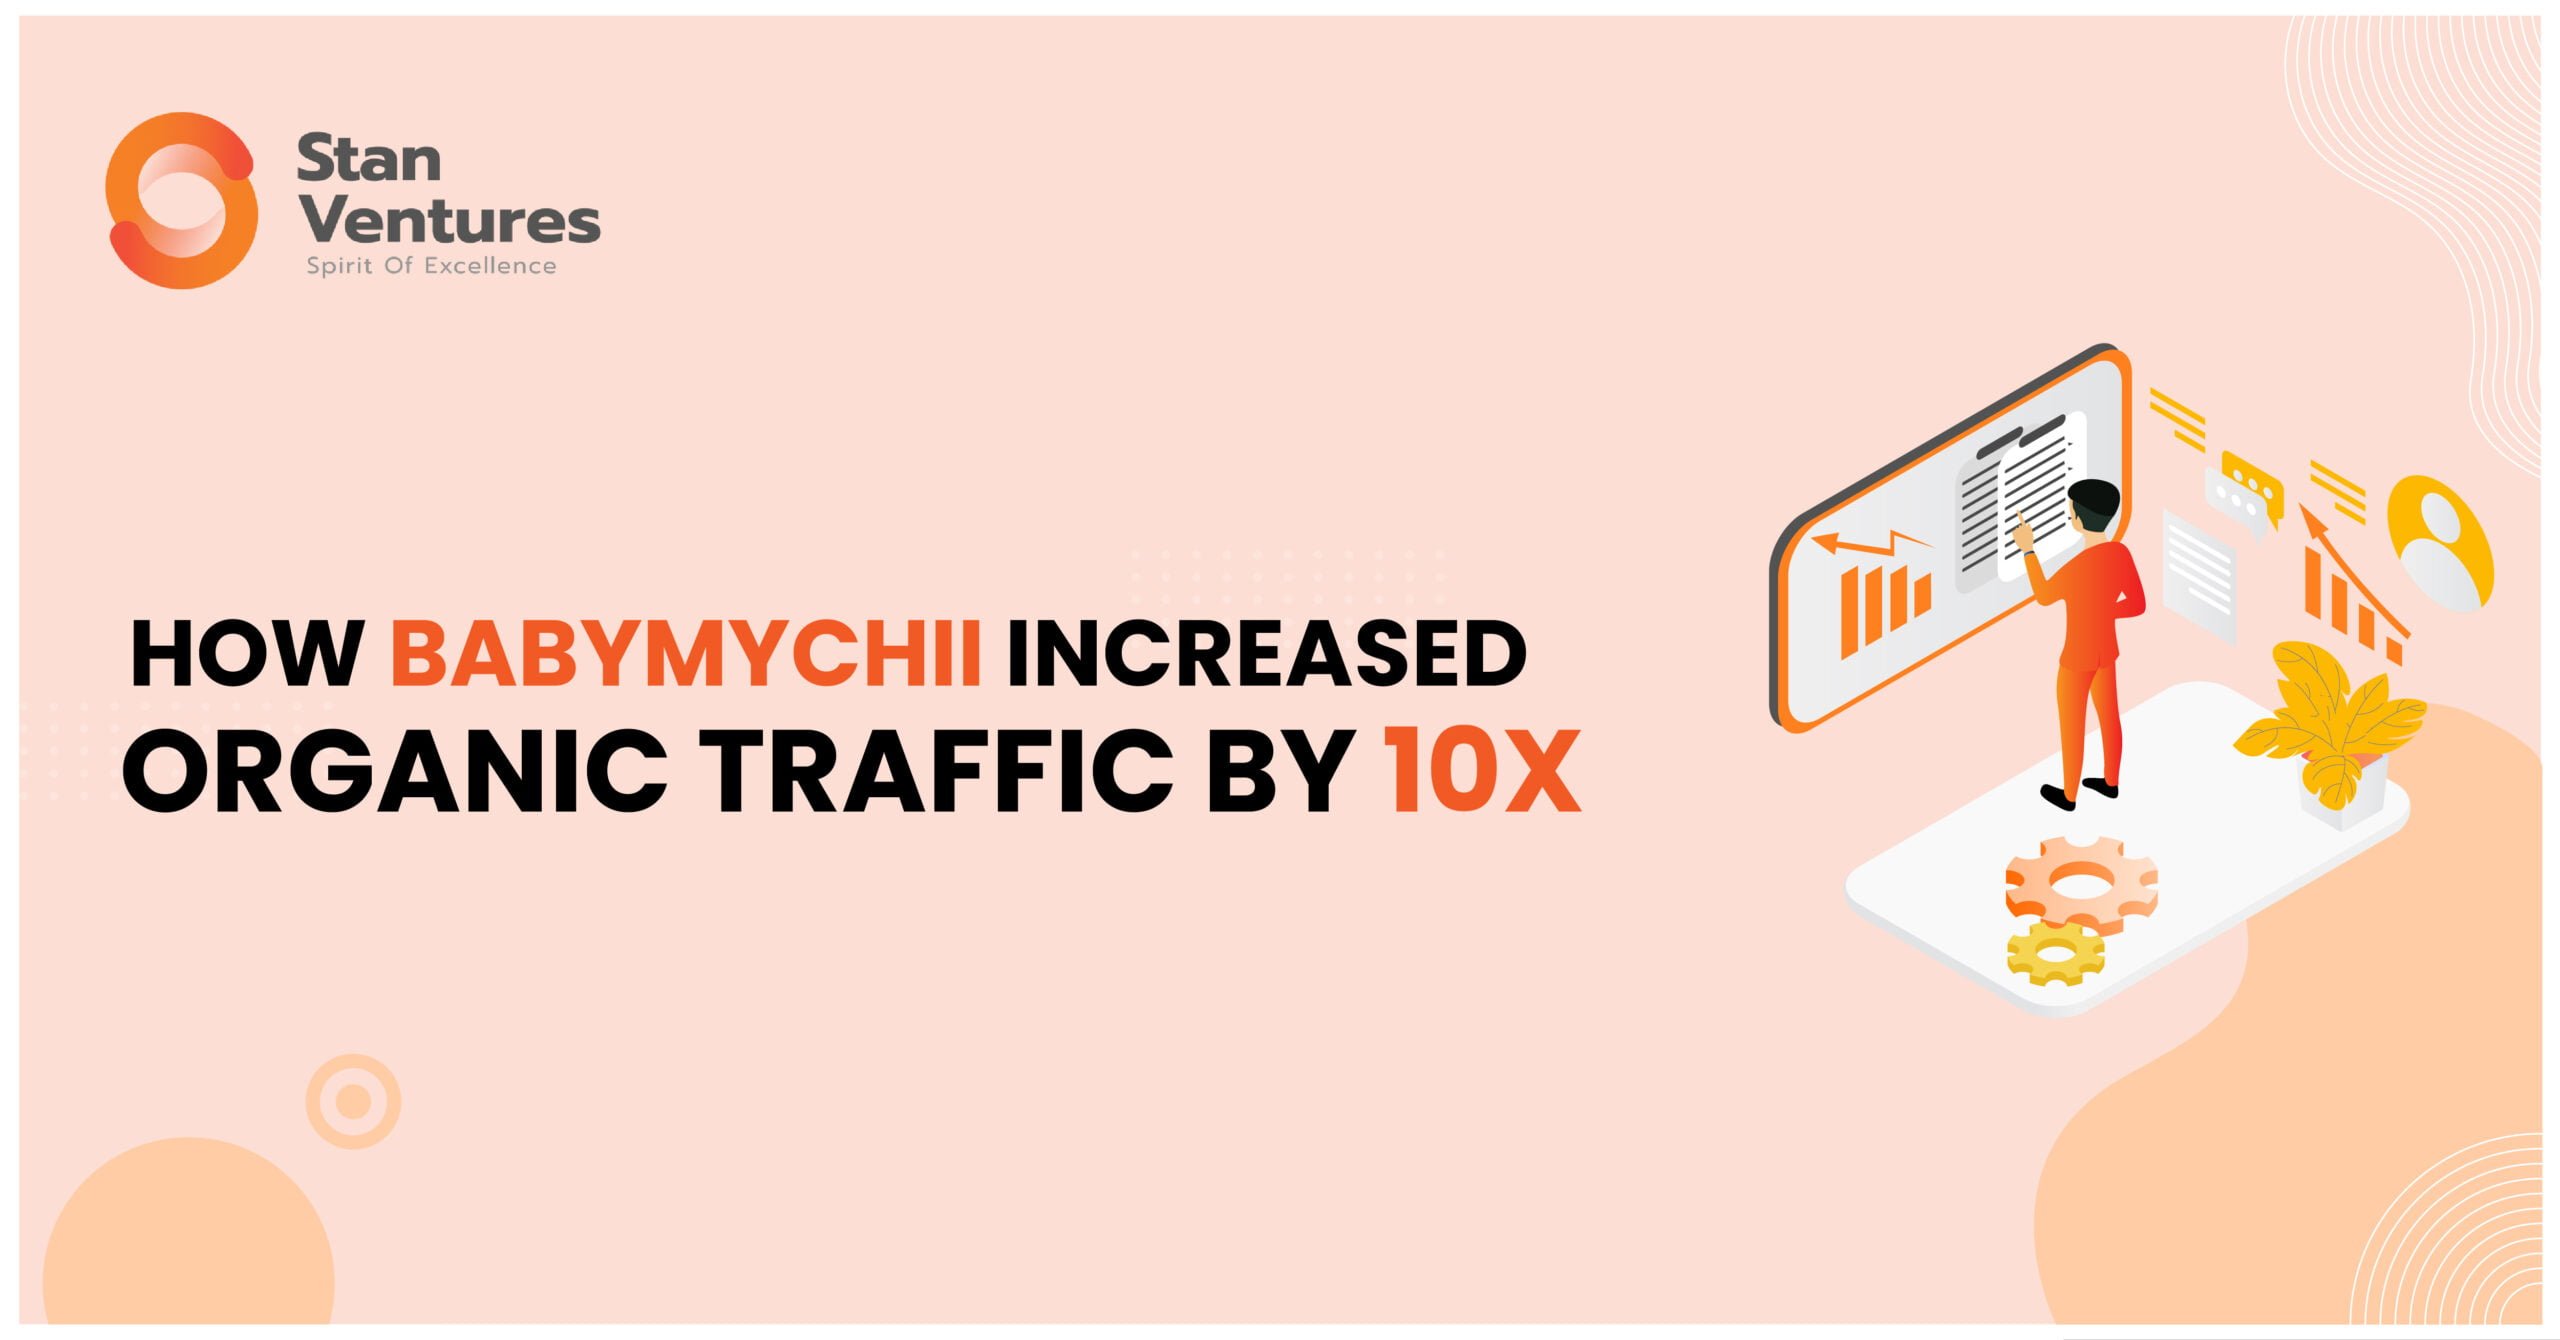 Babymychii has Increased Organic Traffic